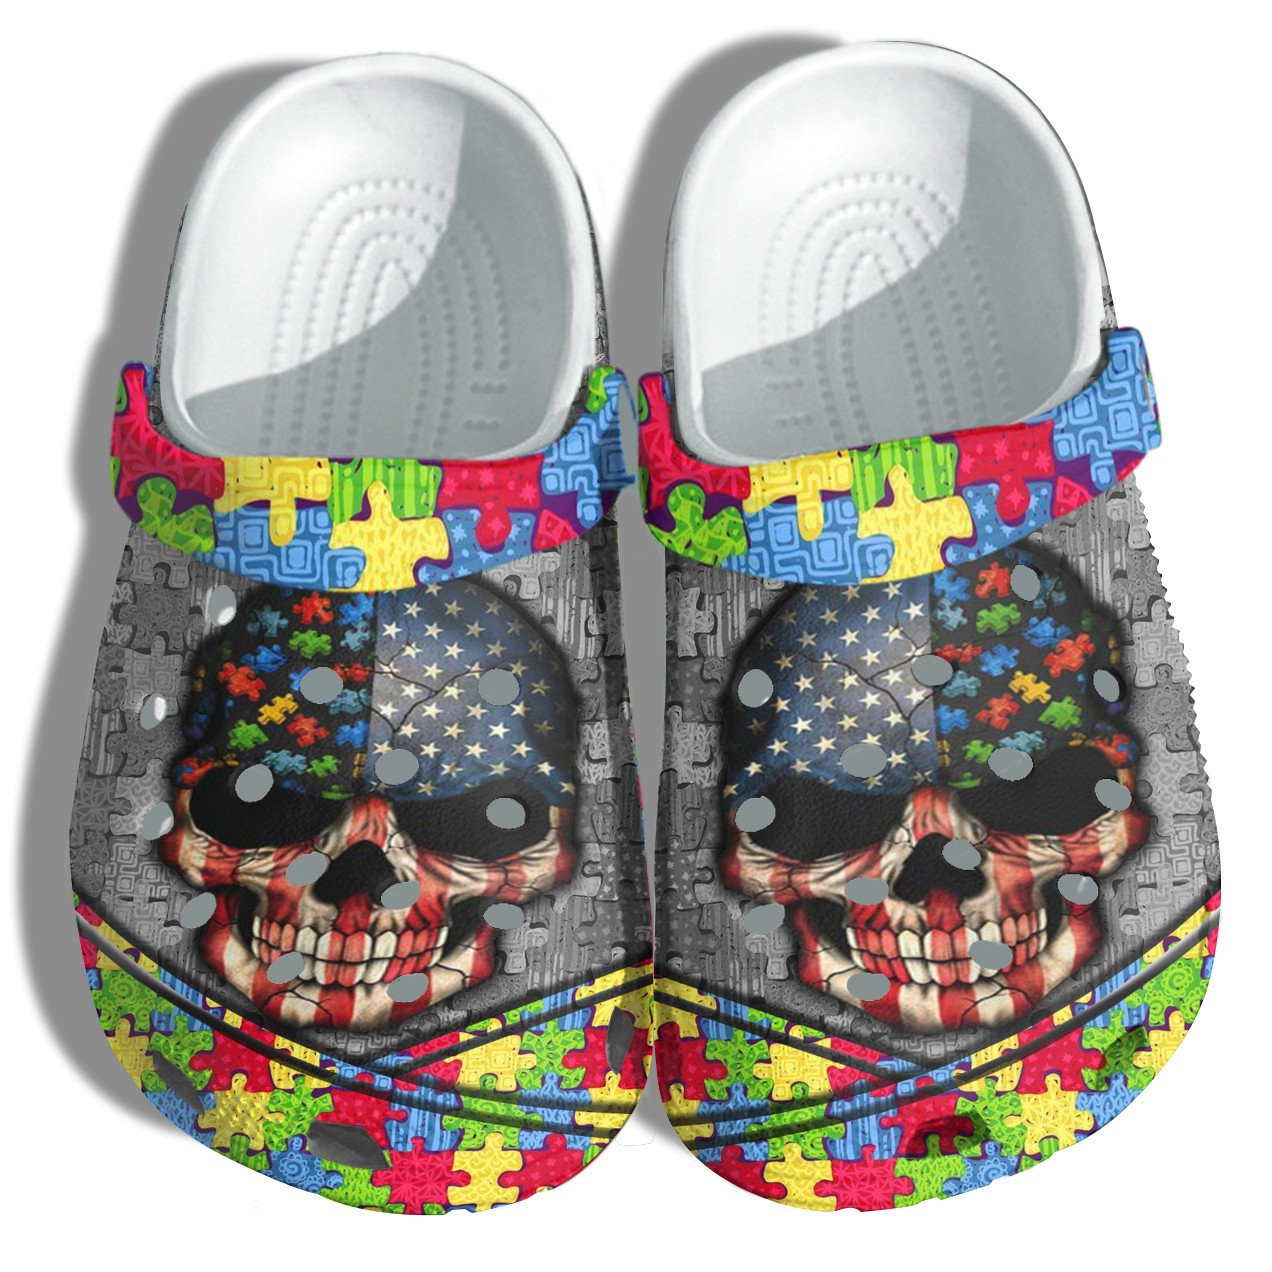 Skull Usa Flag Autism Awareness Crocs Shoes - Autism Puzzel Shoes Croc Clogs Gifts Men Women